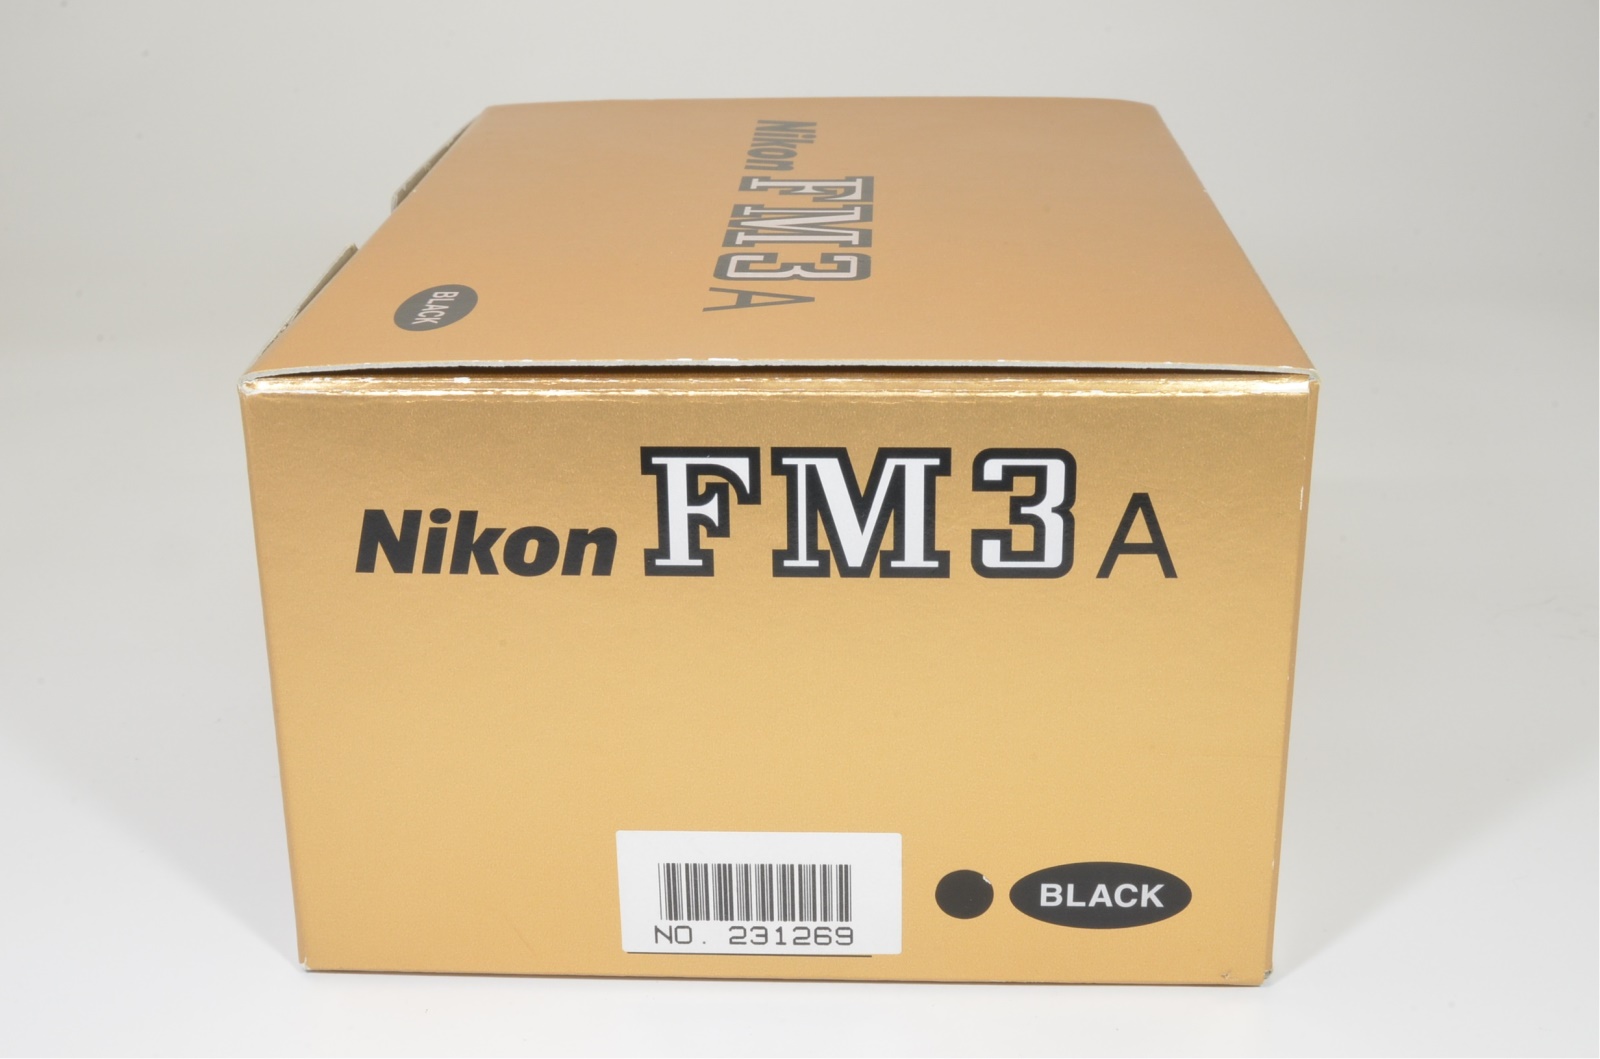 nikon fm3a 35mm film camera black with e3 focusing screen shooting tested